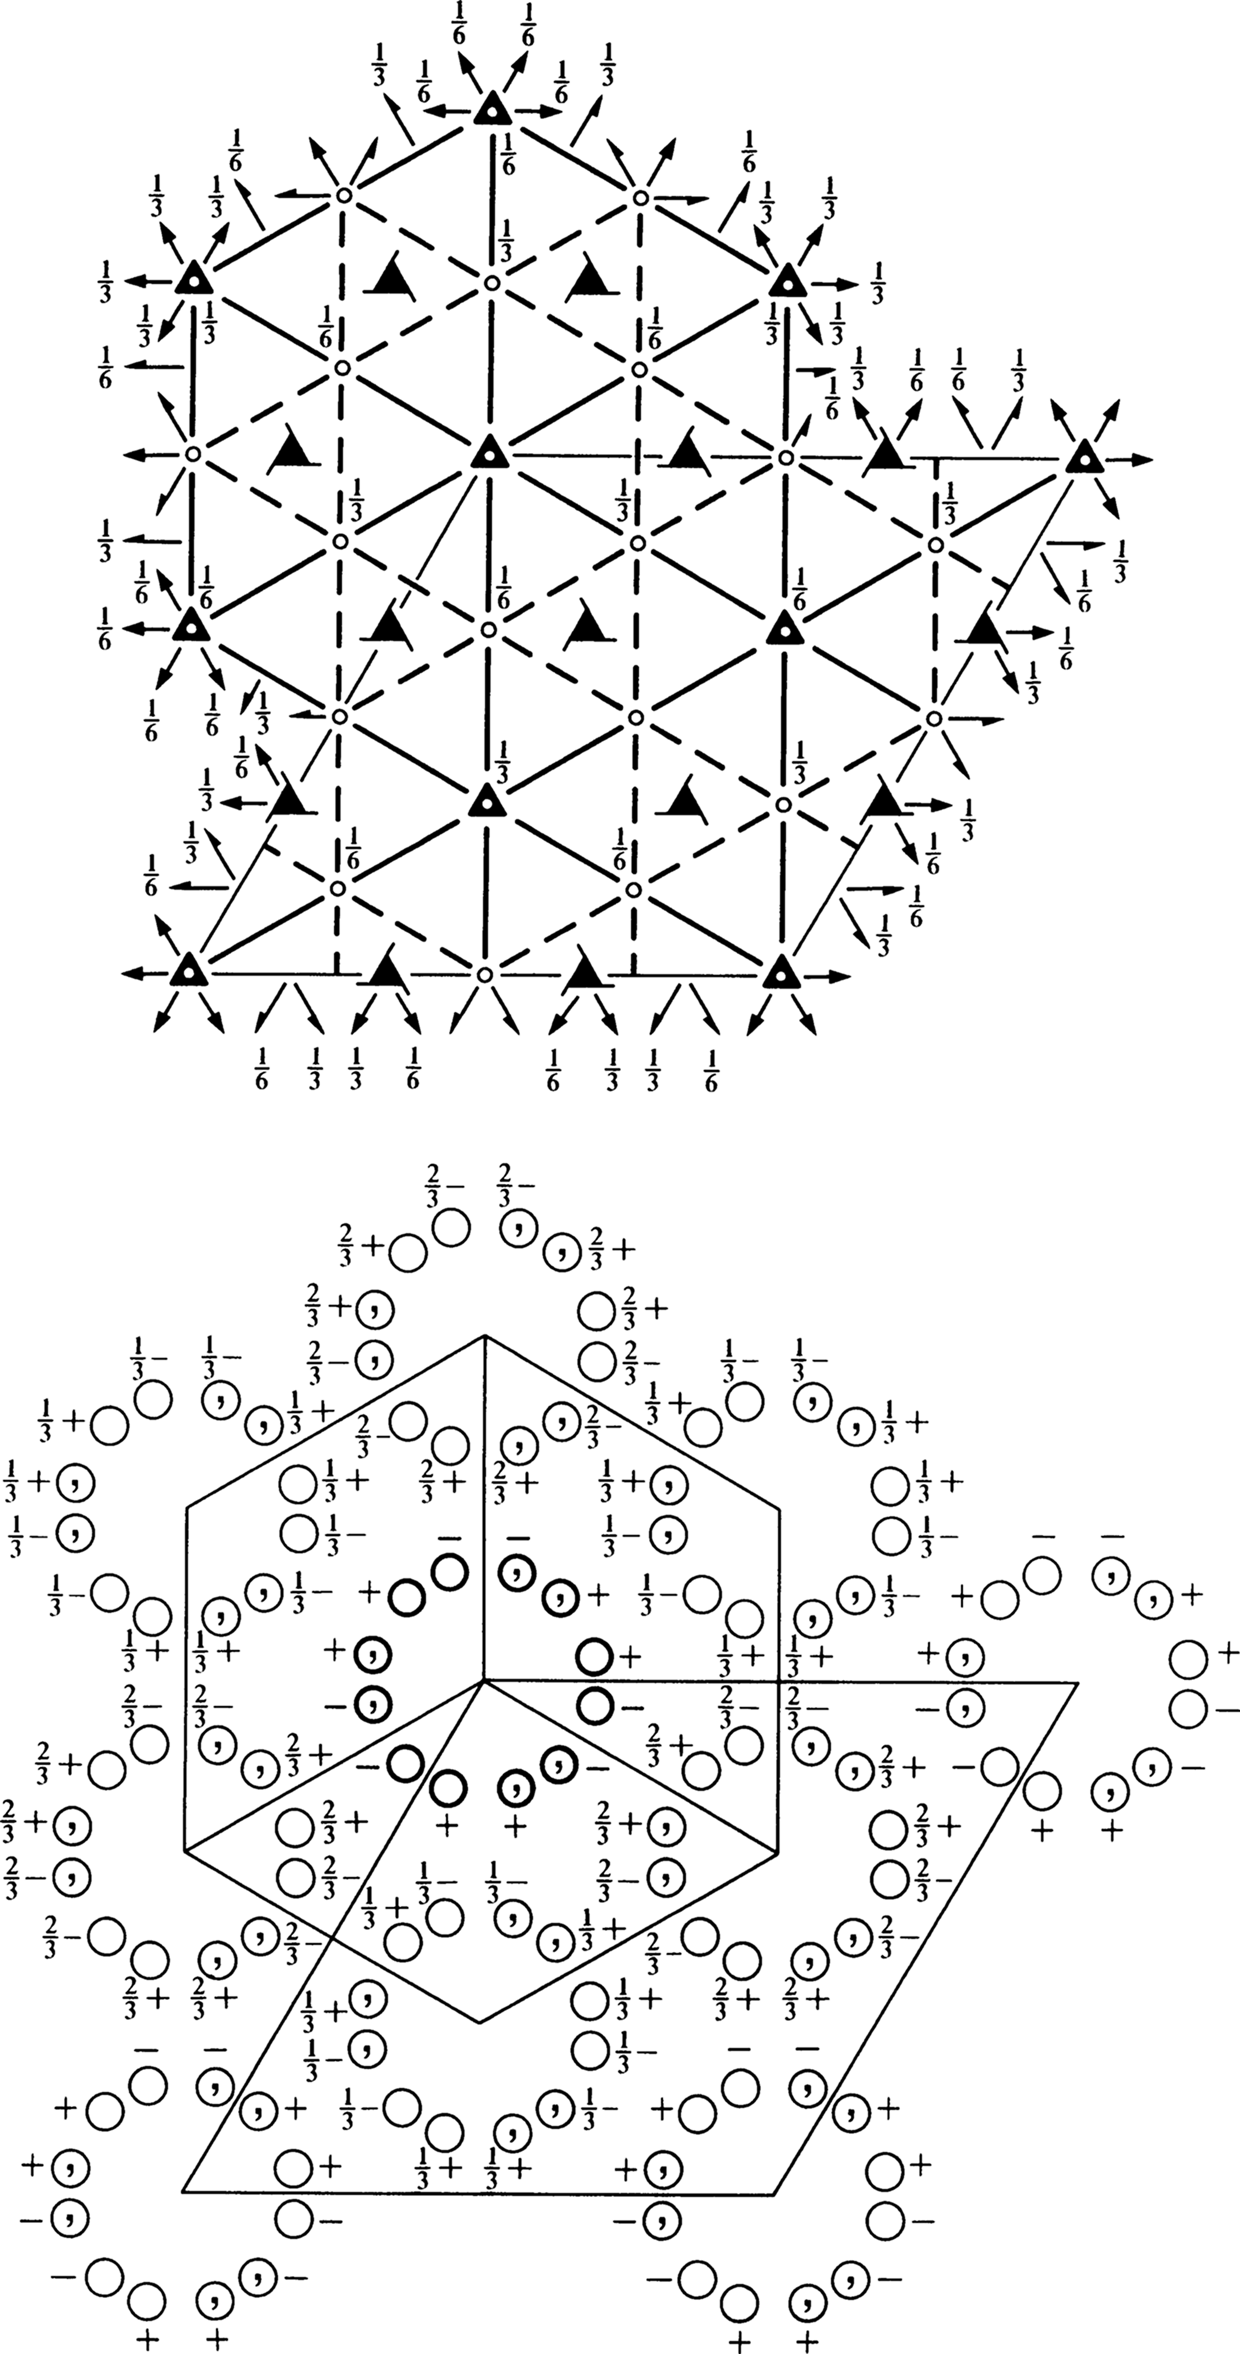 symmetry group diagram